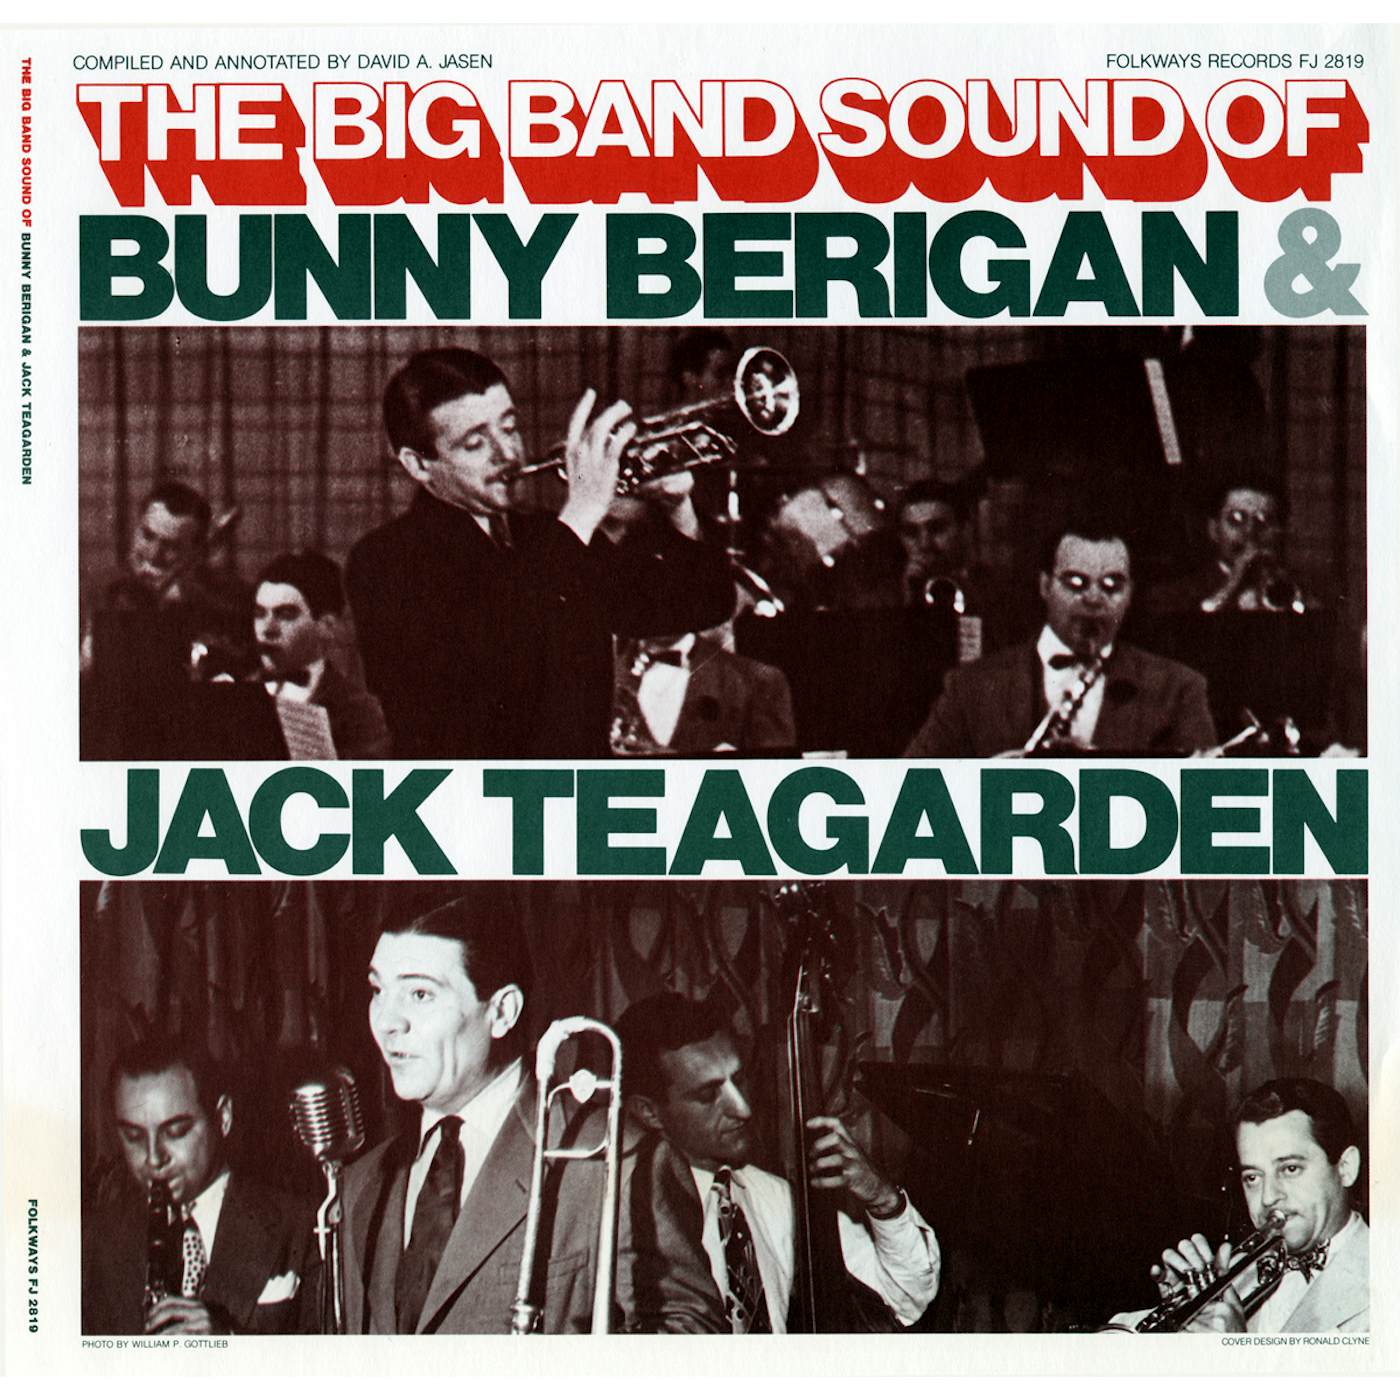 THE BIG BAND SOUNDS OF BUNNY BERIGAN AND JACK CD